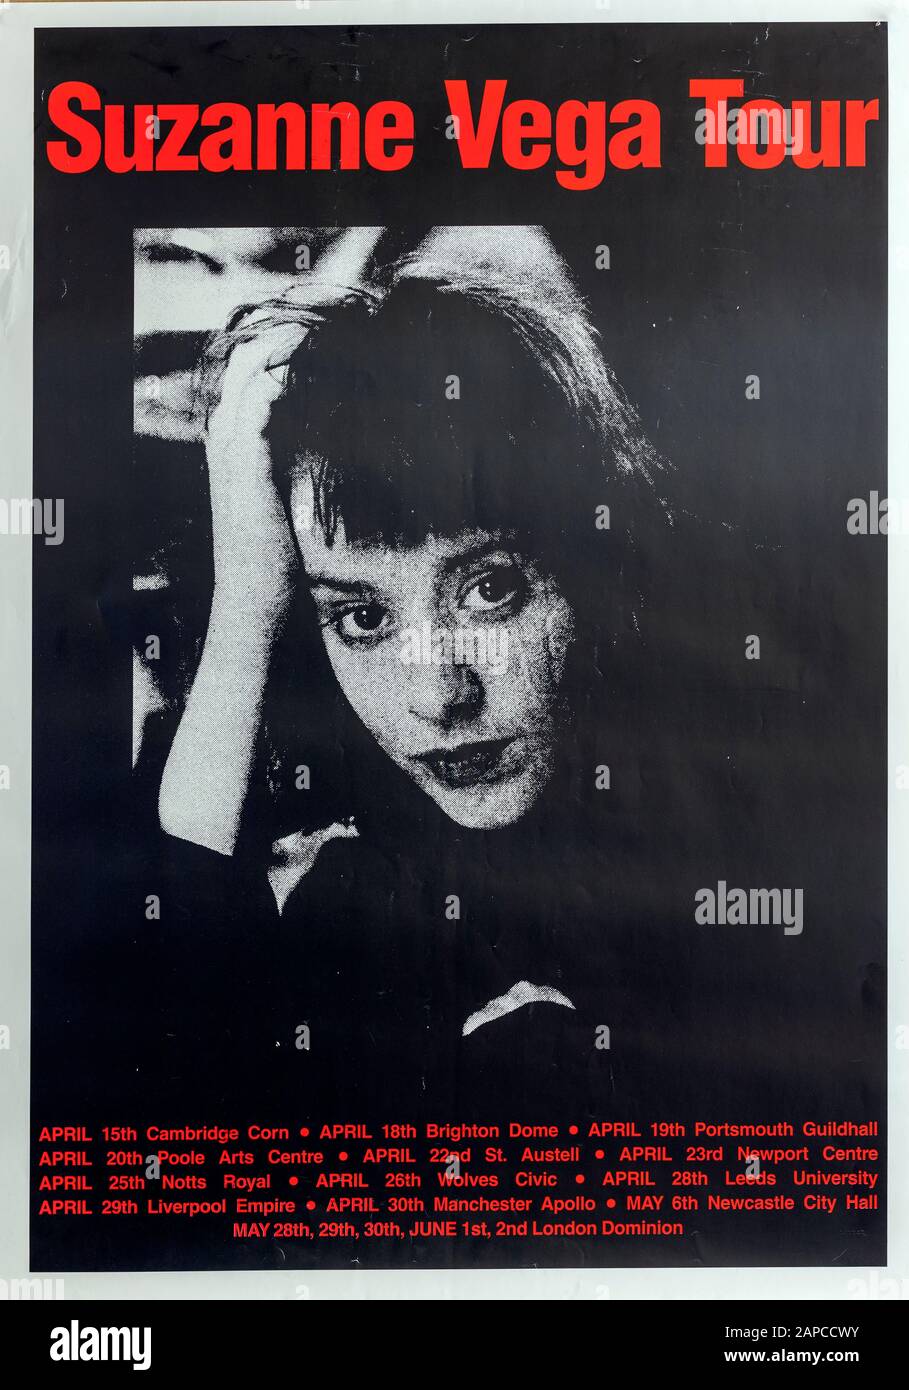 Suzanne Vega UK Tour 1990, Musical concert poster Stock Photo